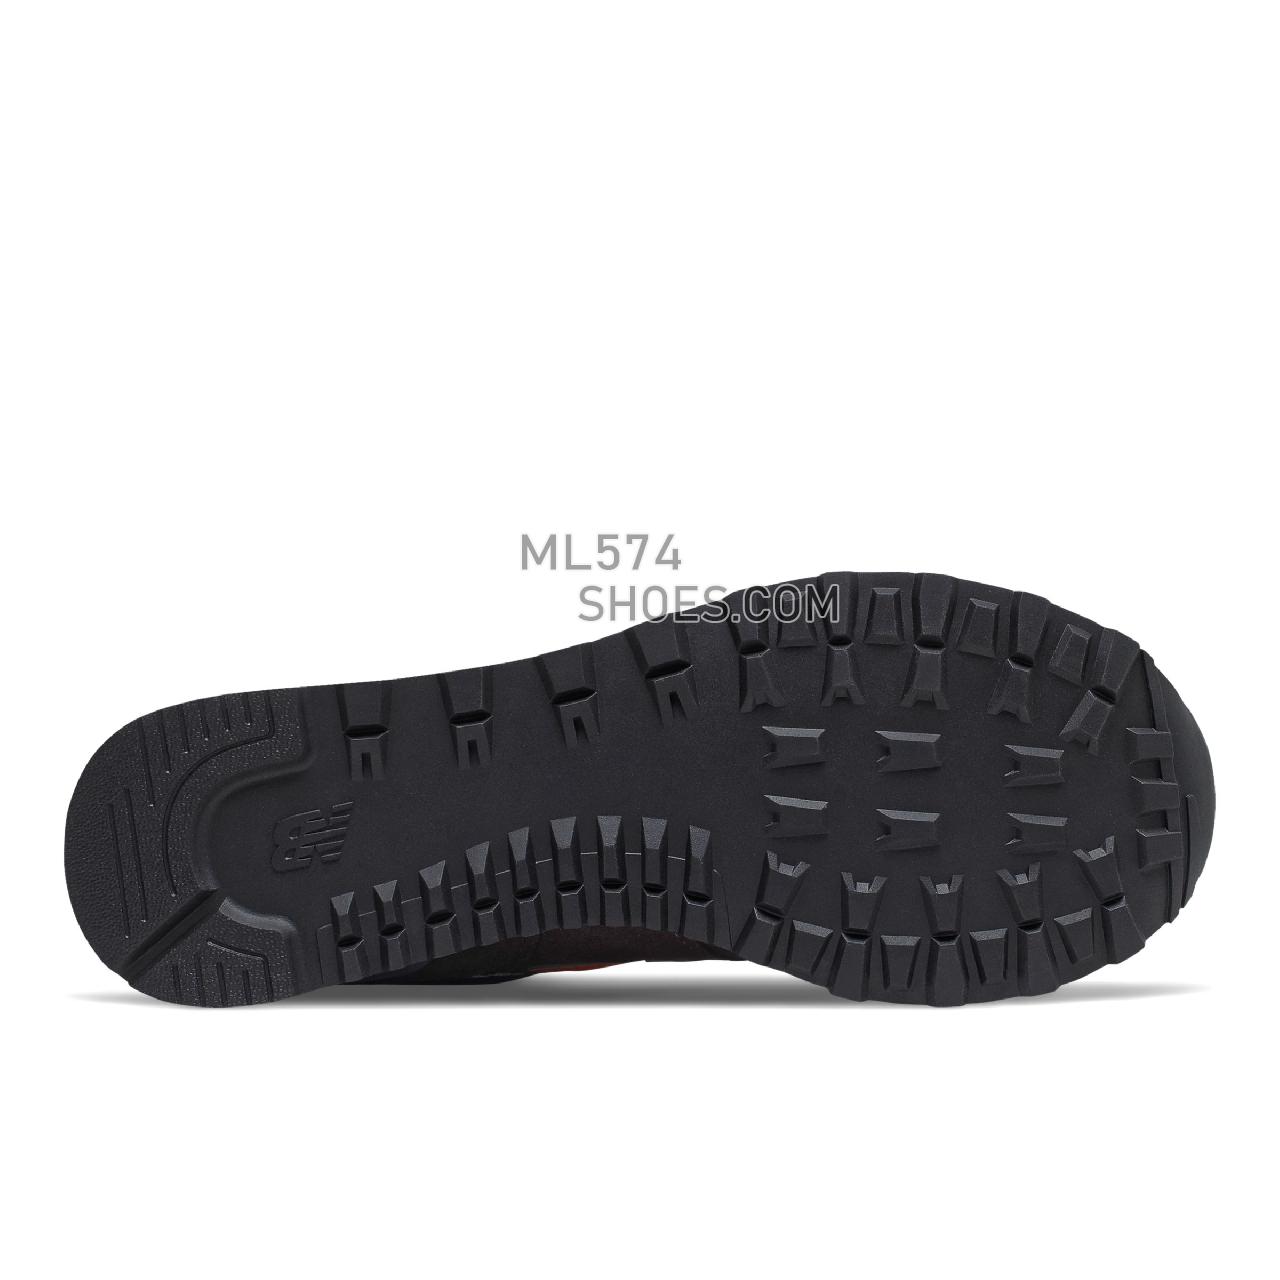 New Balance 574v2 - Men's Classic Sneakers - Black Coffee with Dynomite - ML574HU2